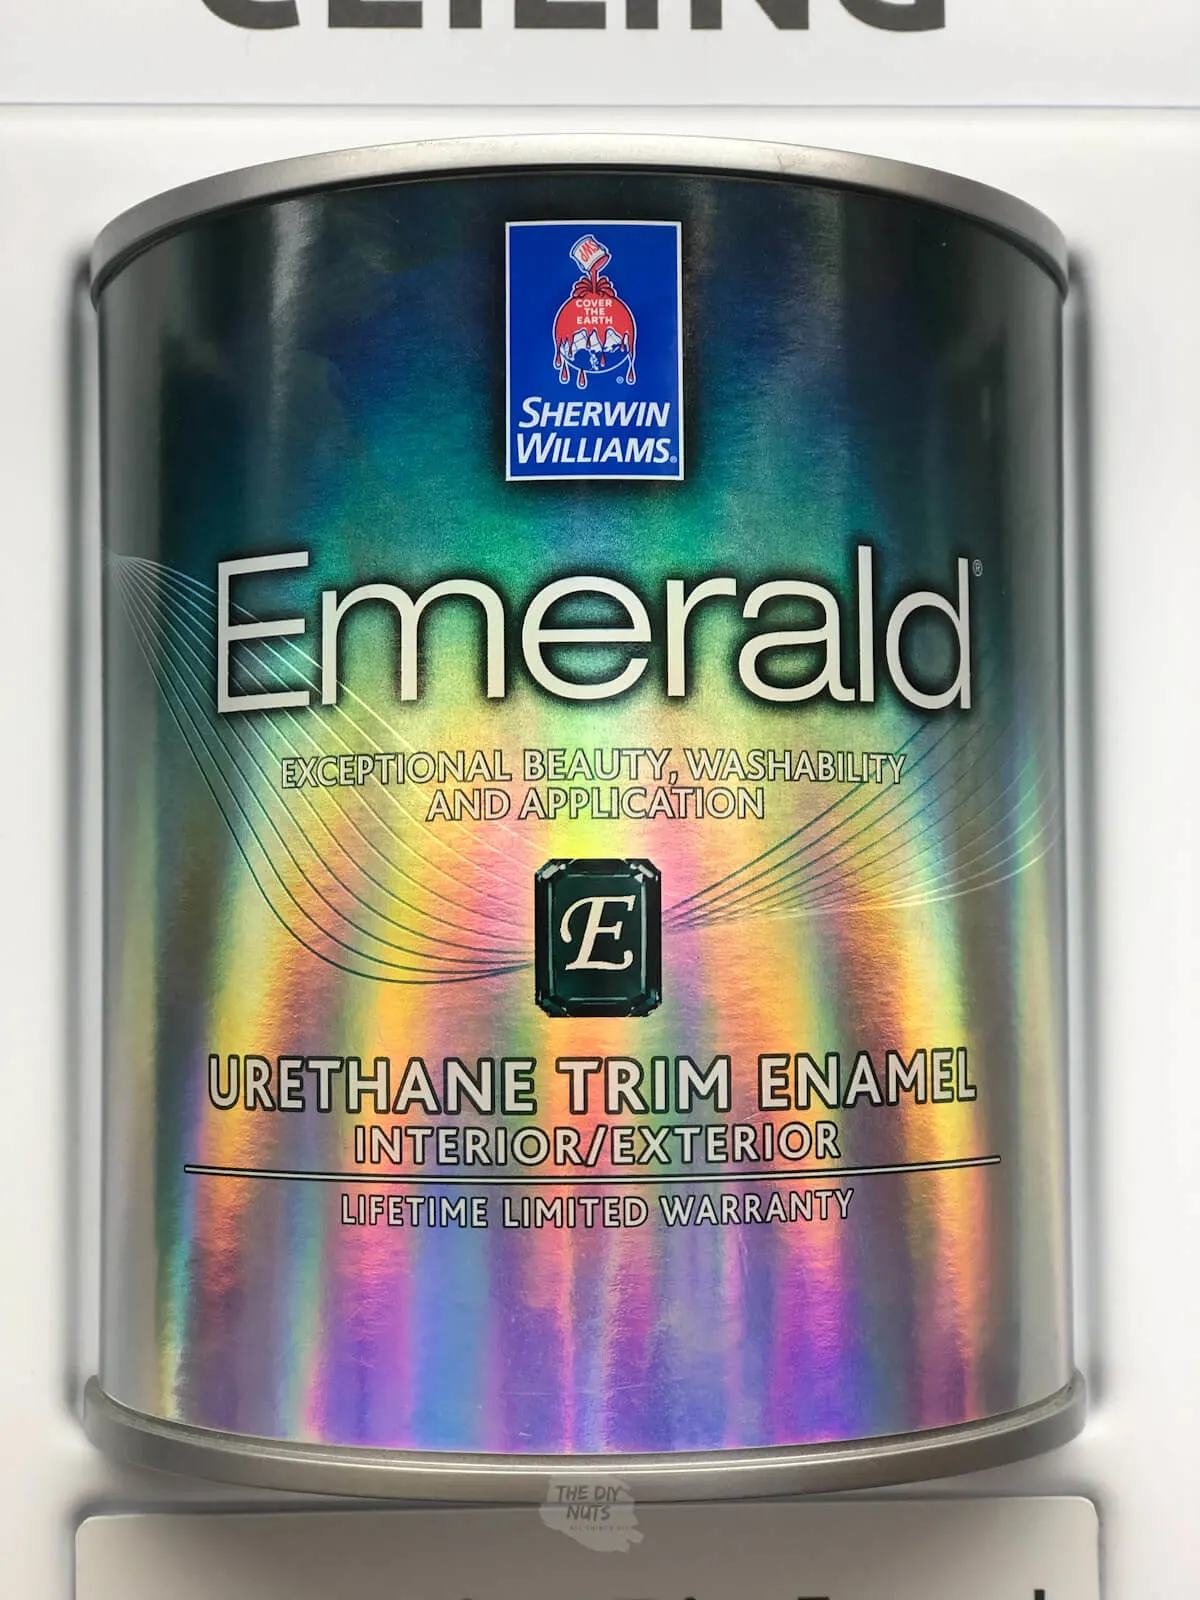 Can of Sherwin Williams Emerald Urethane Trim Enamel.